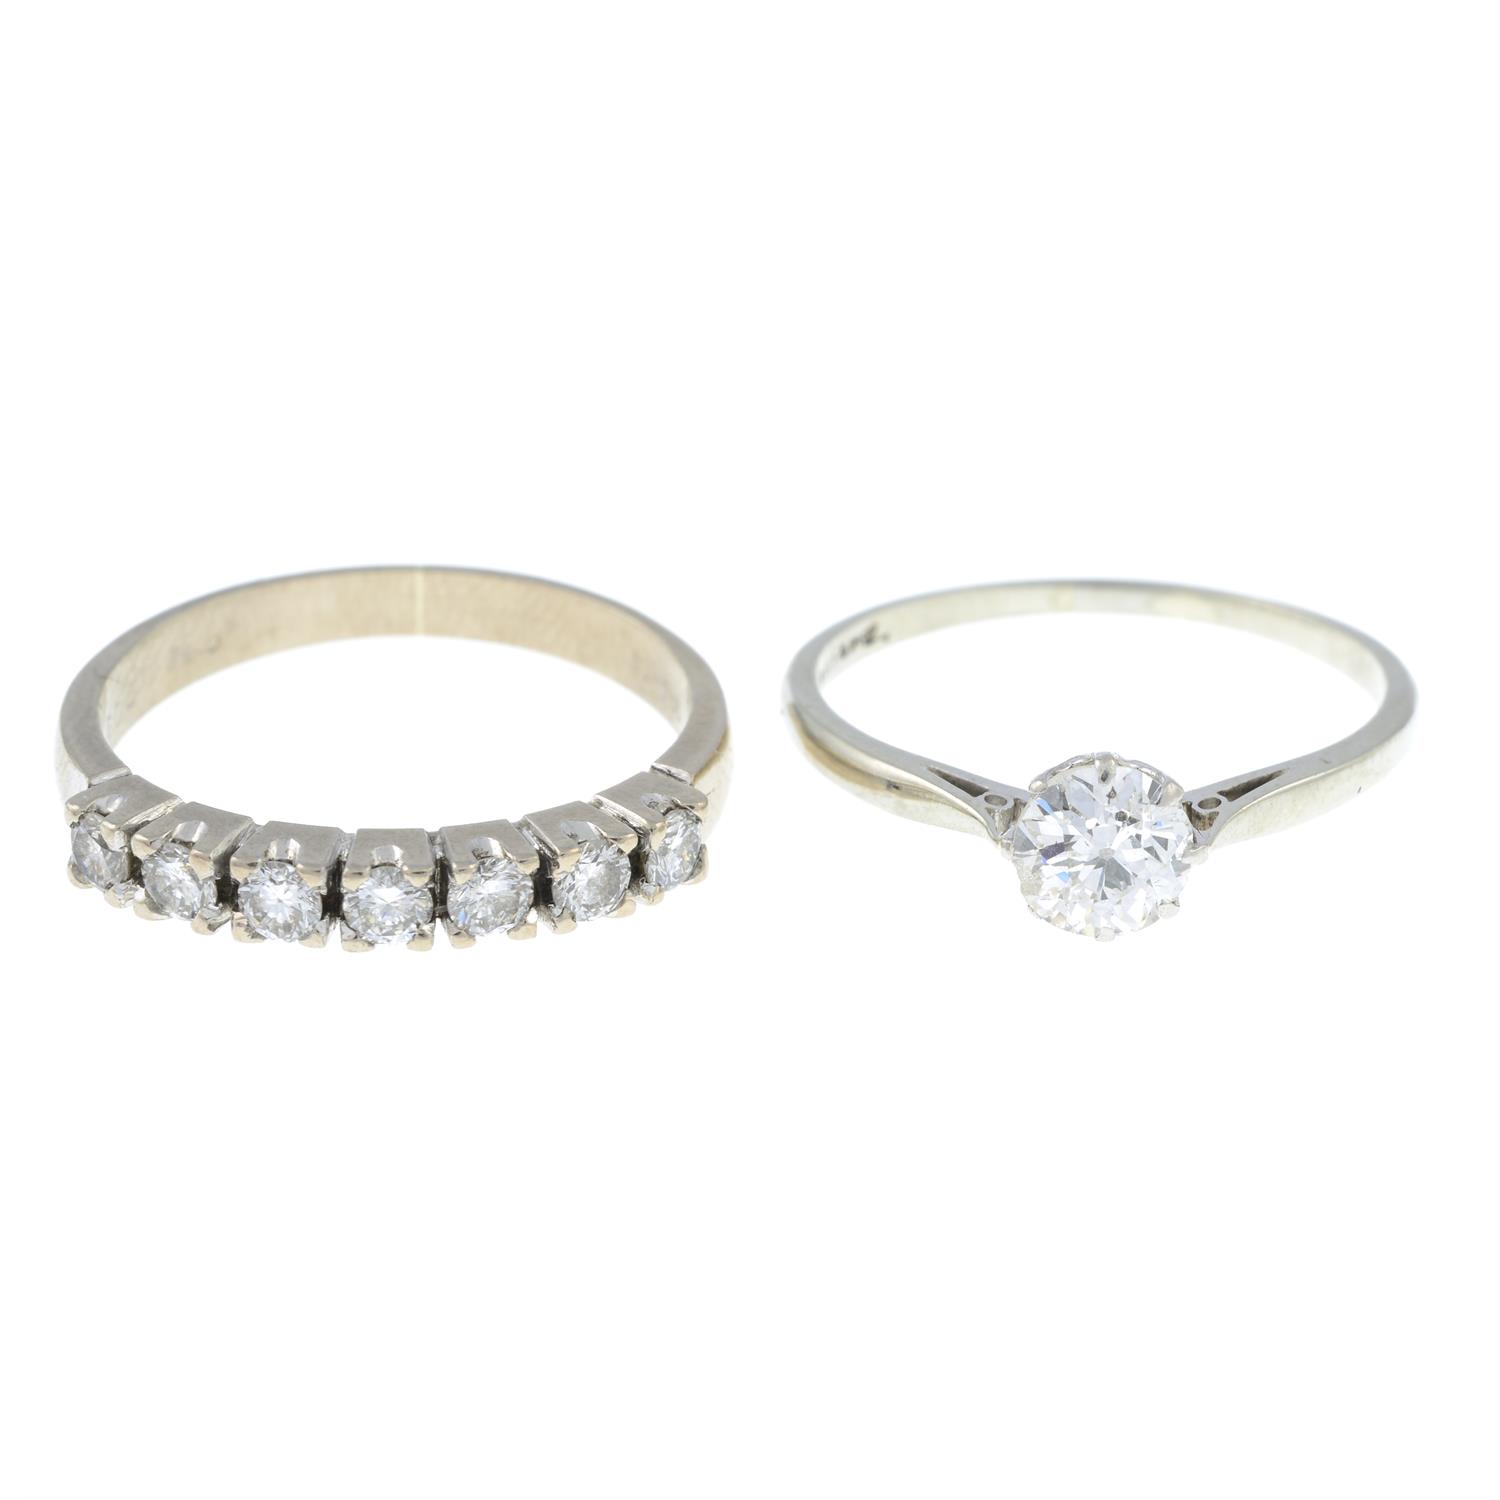 An old-cut diamond single-stone ring and a brilliant-cut diamond half eternity ring.